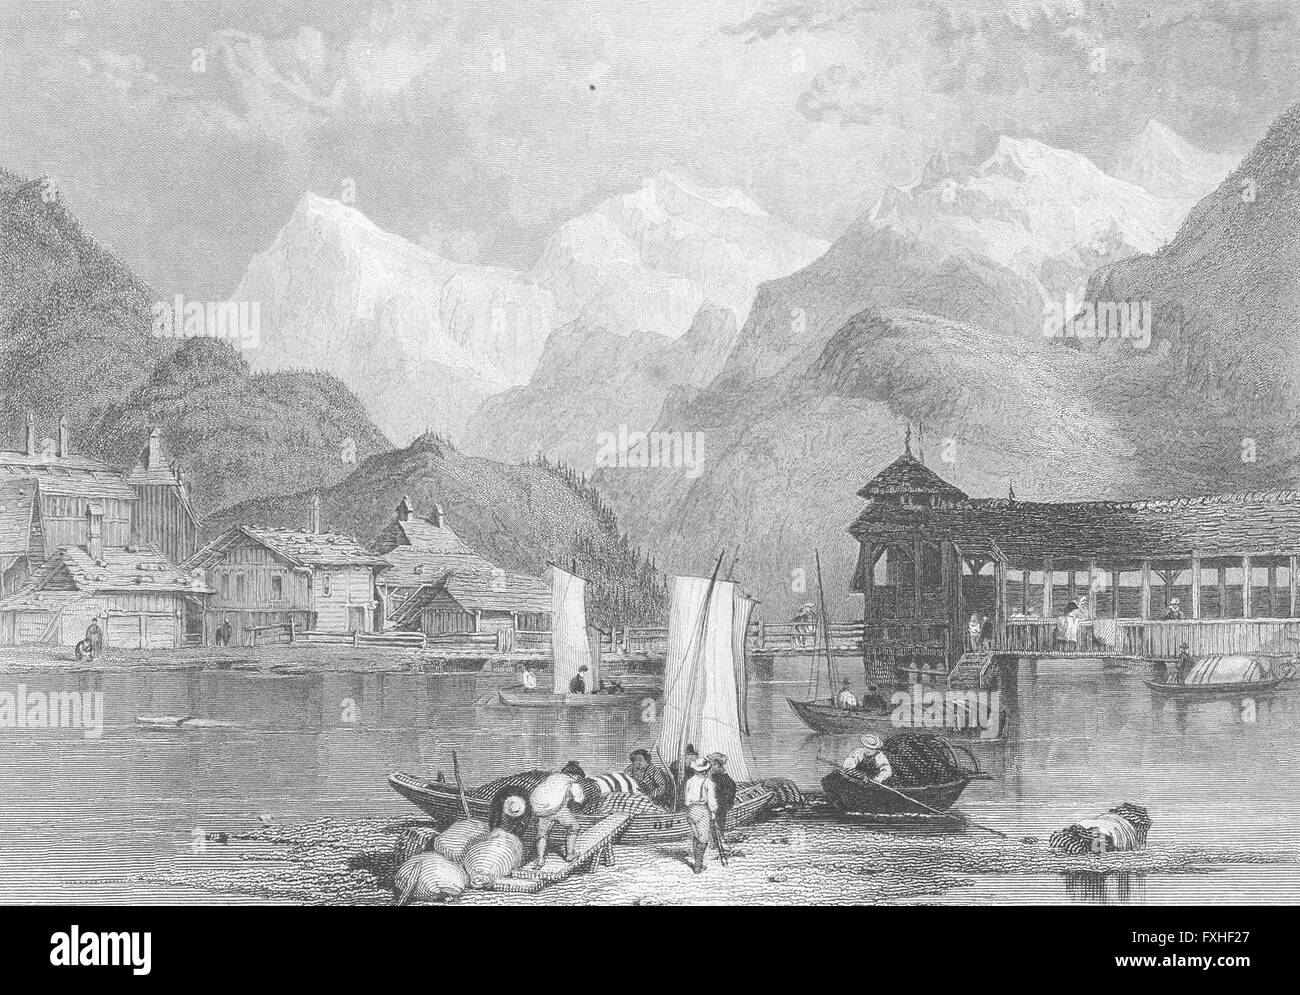 INTERLAKEN: Swiss: Fullarton Lausanne, Finden, antique print 1850 Stockfoto